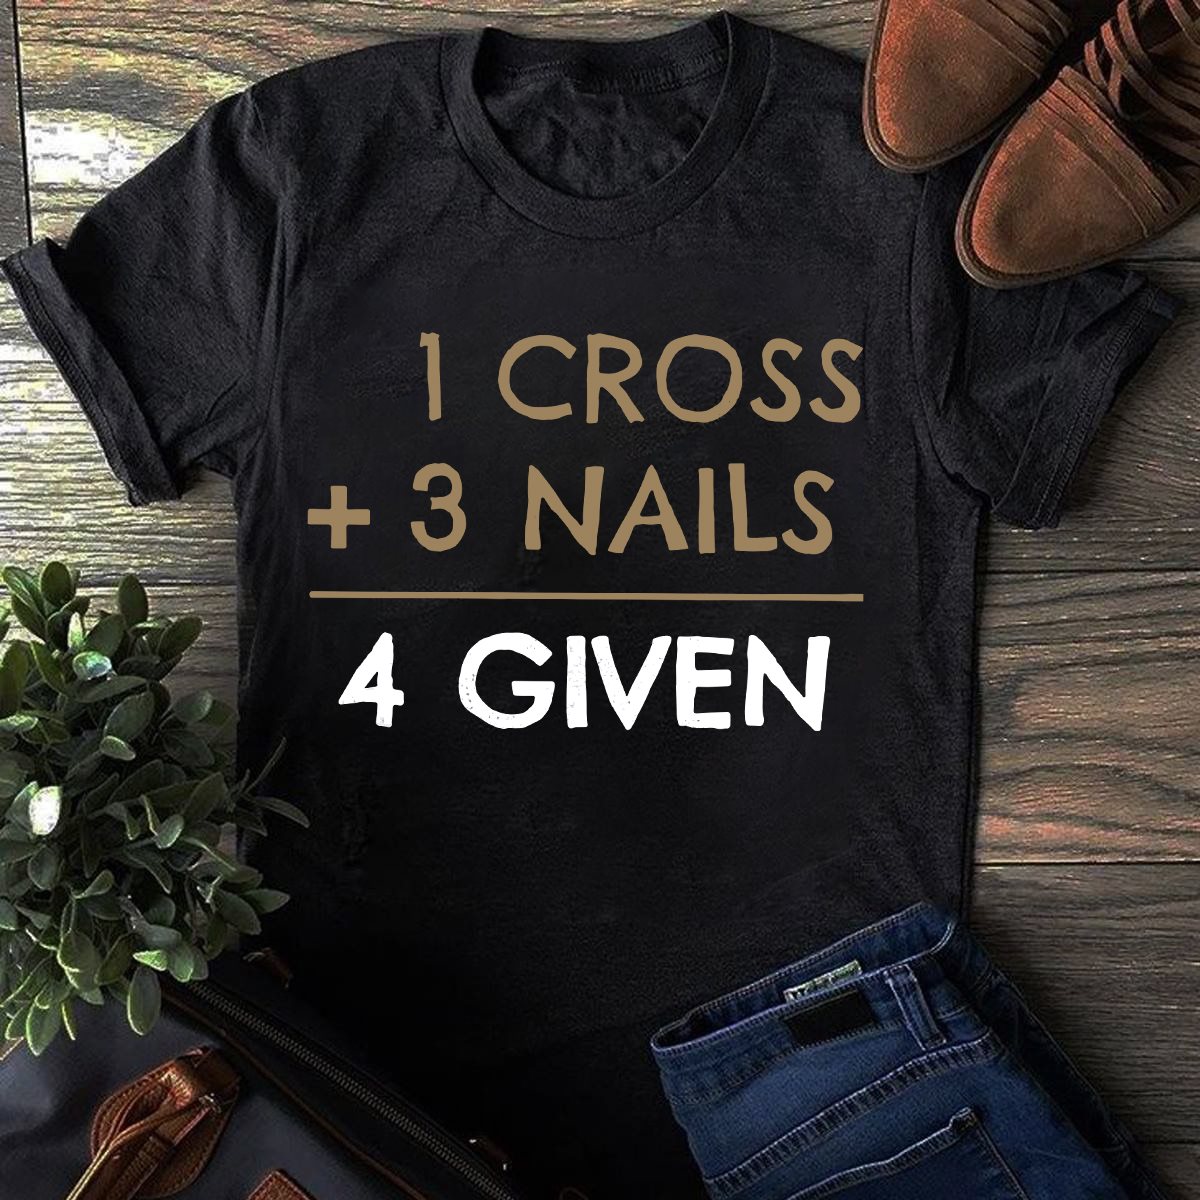 1 cross + 3 nails 4 given - God's cross